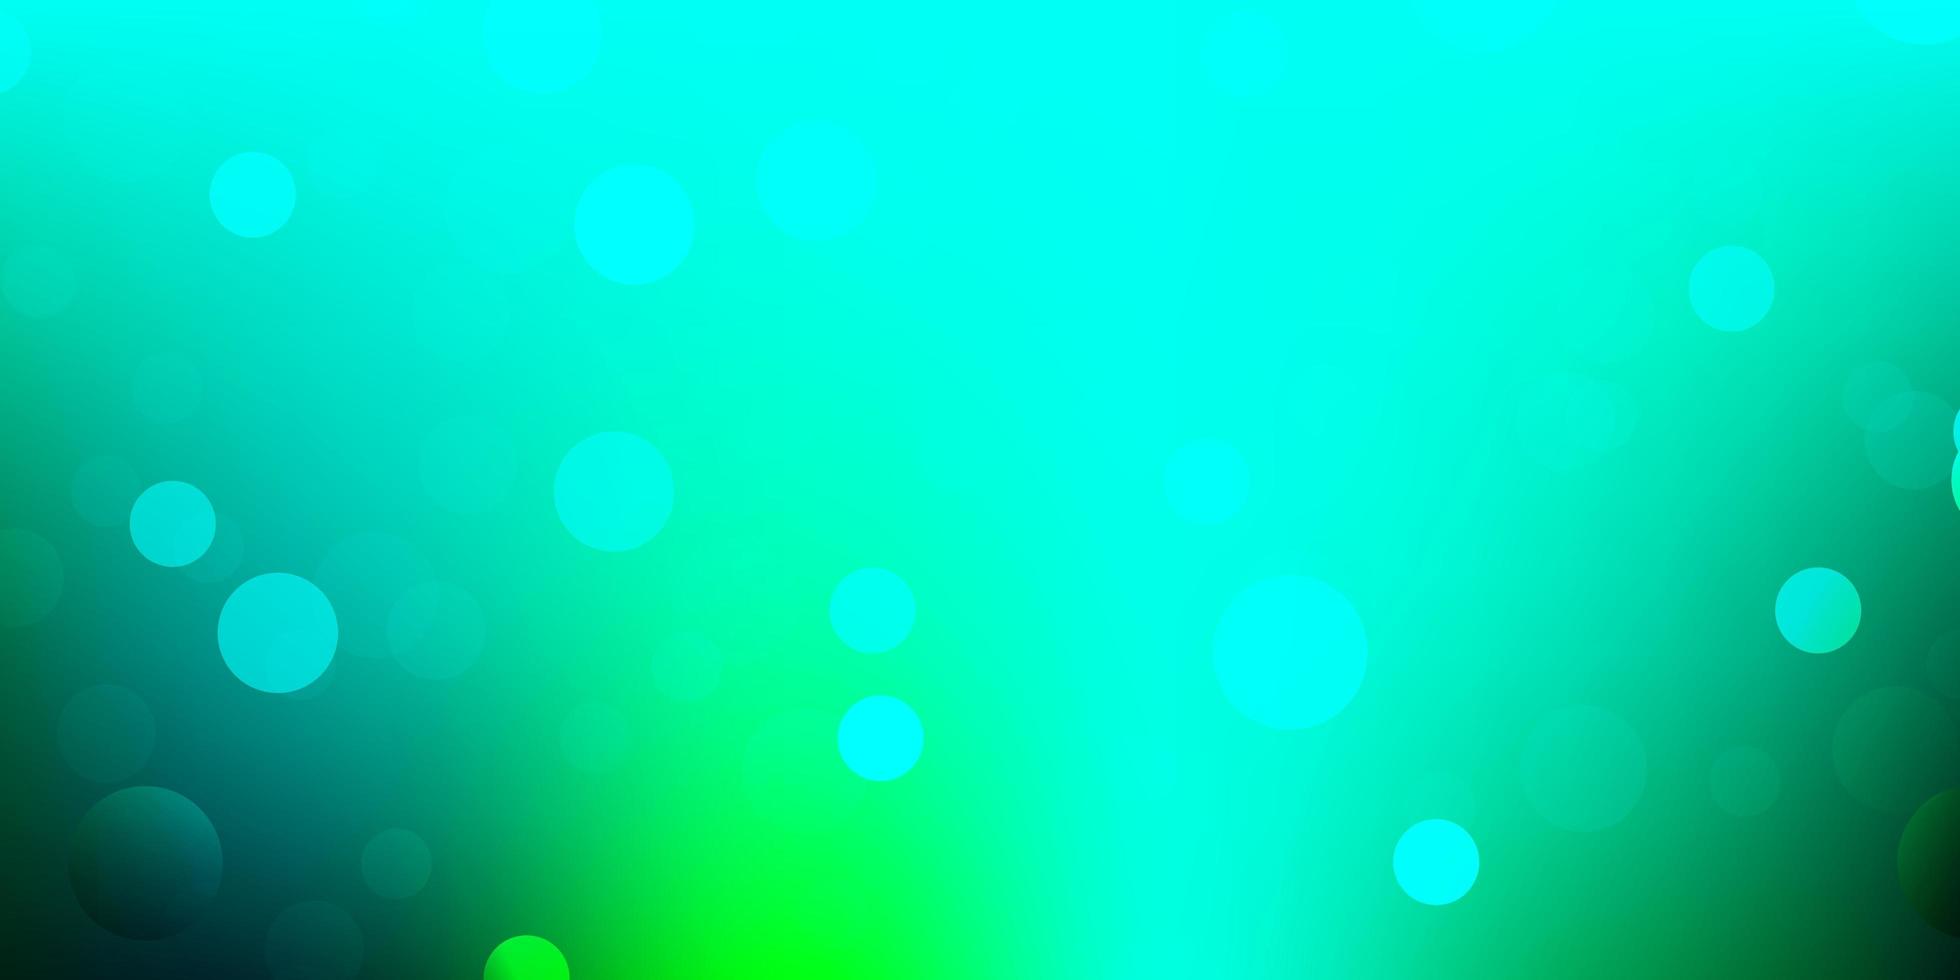 textura de vector verde claro con formas de memphis.